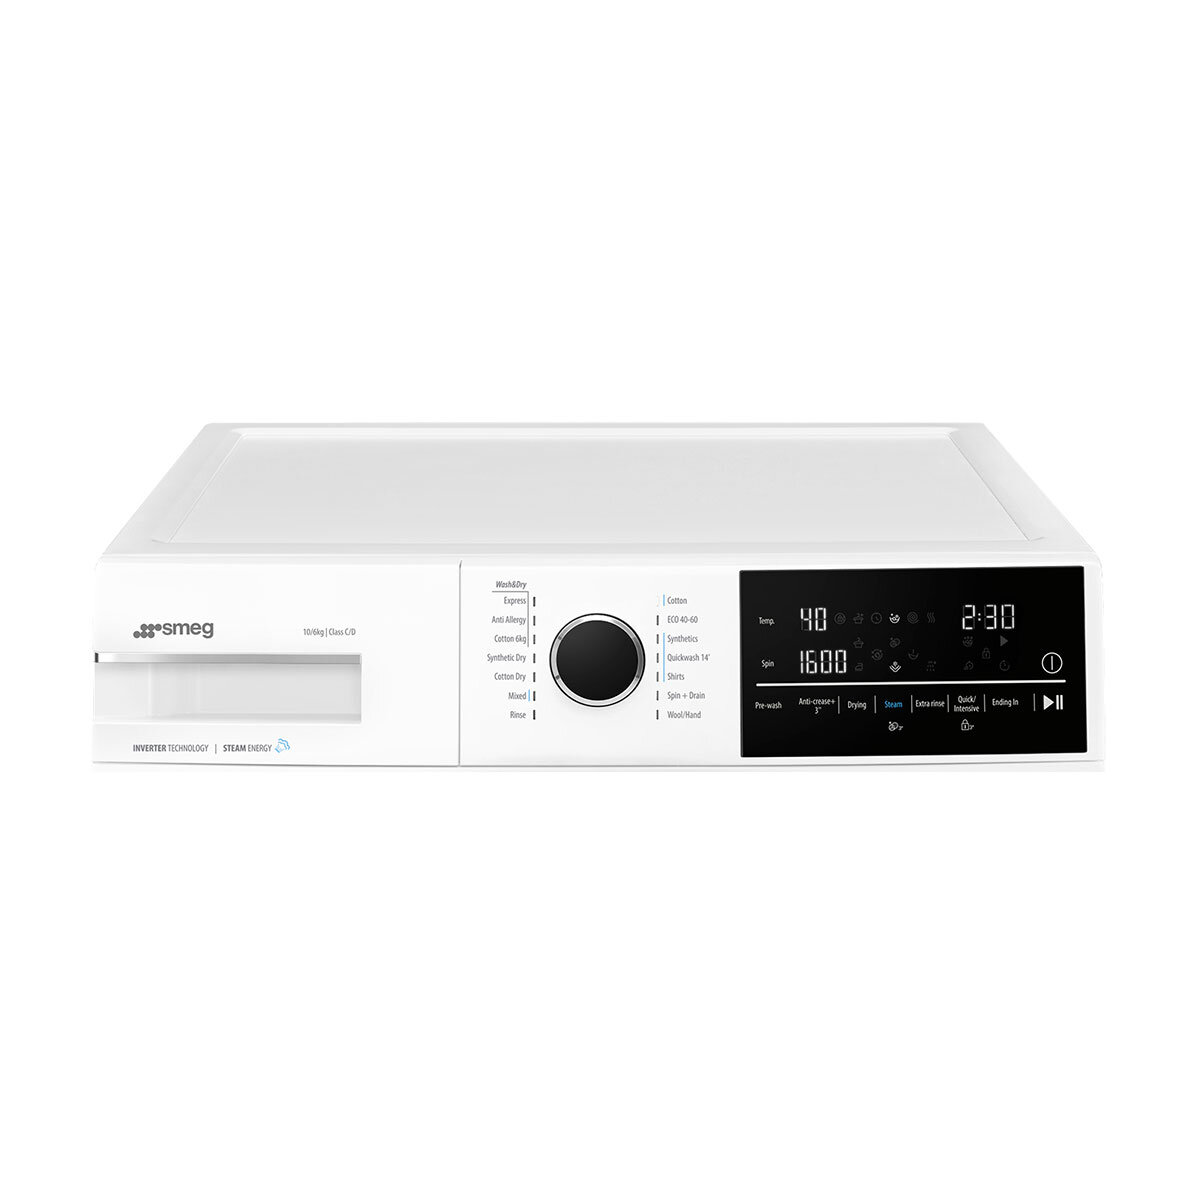 Buy Smeg WDN064SLDUK 10/6kg Washer Dryer in White at Costco.co.uk